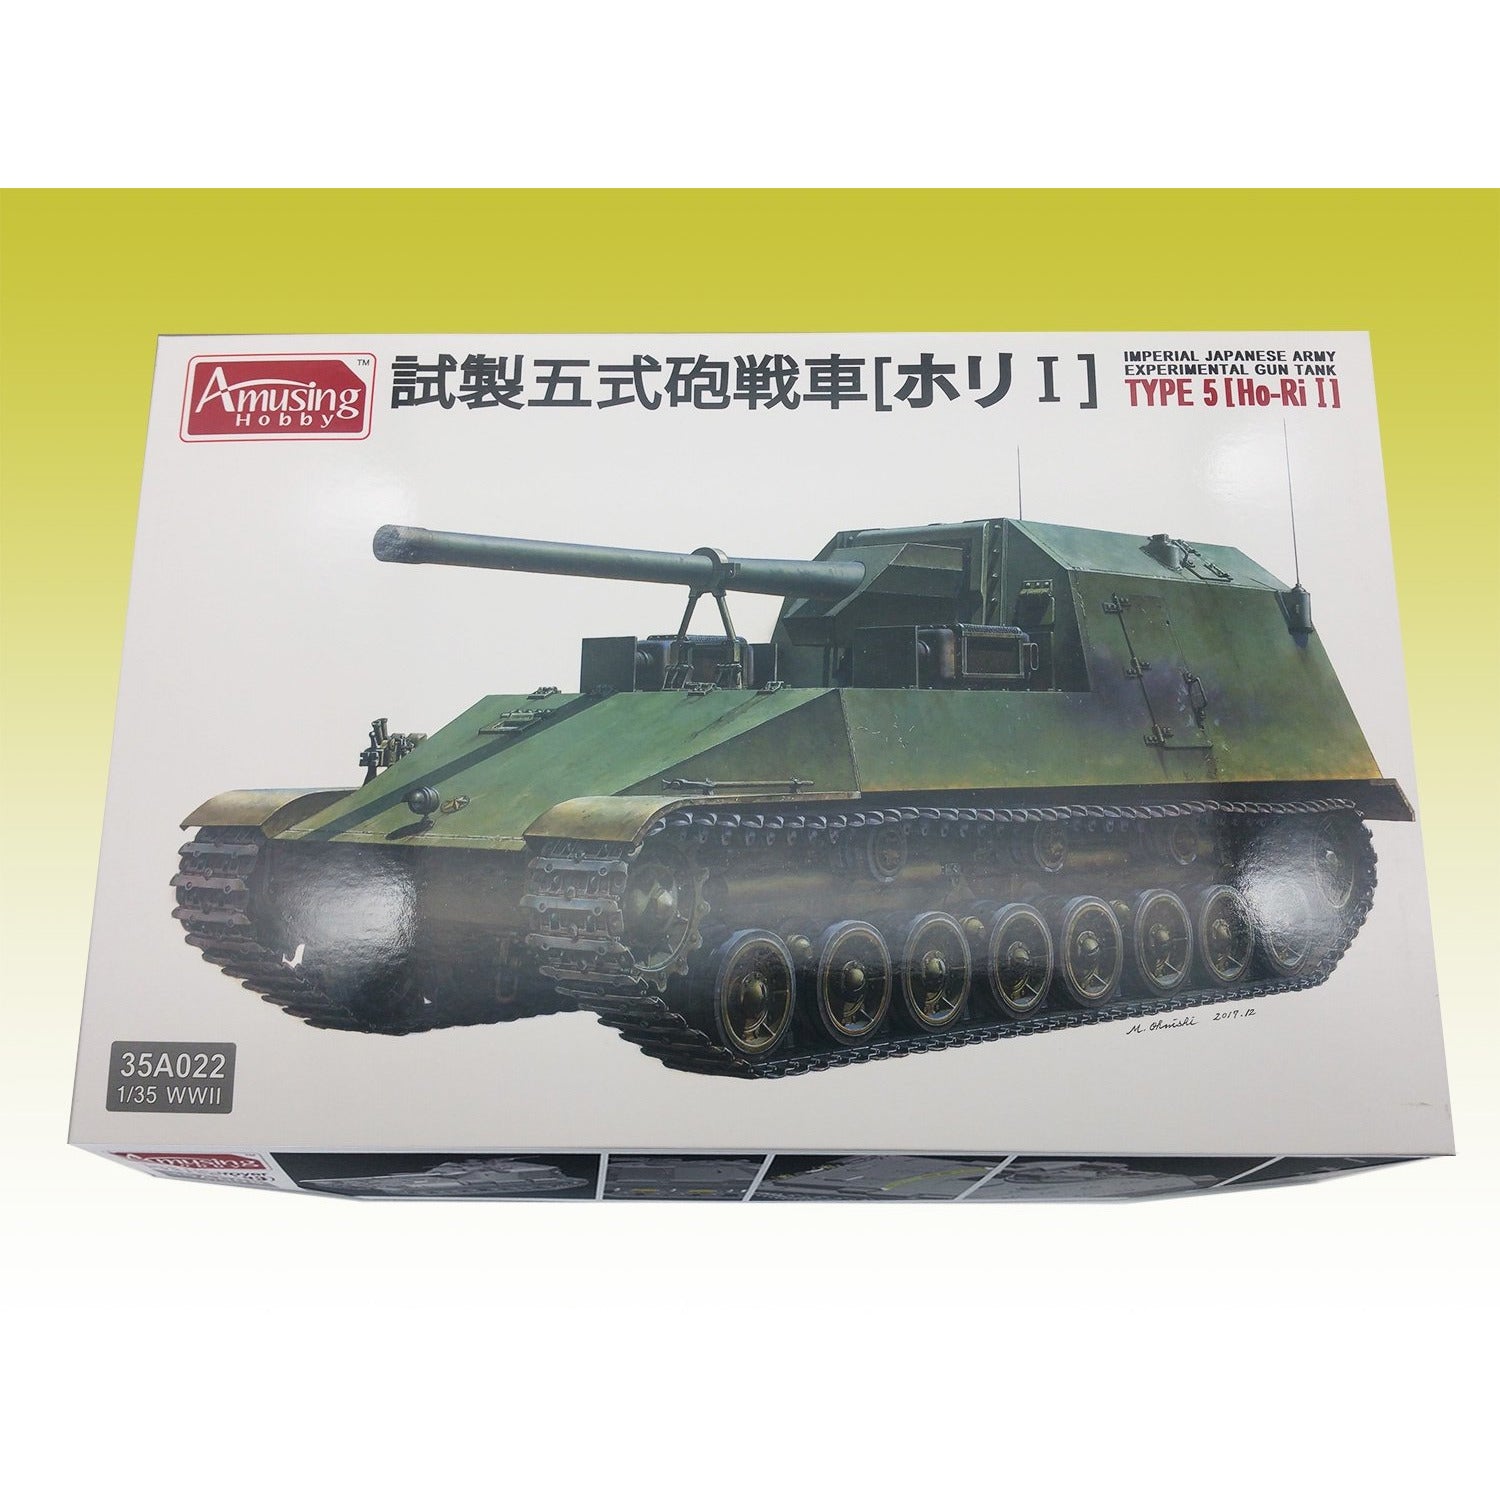 Imperial Japanese Army Experimental Gun Tank Type 5 (Ho-RiI) 1/35 by Amusing Hobby